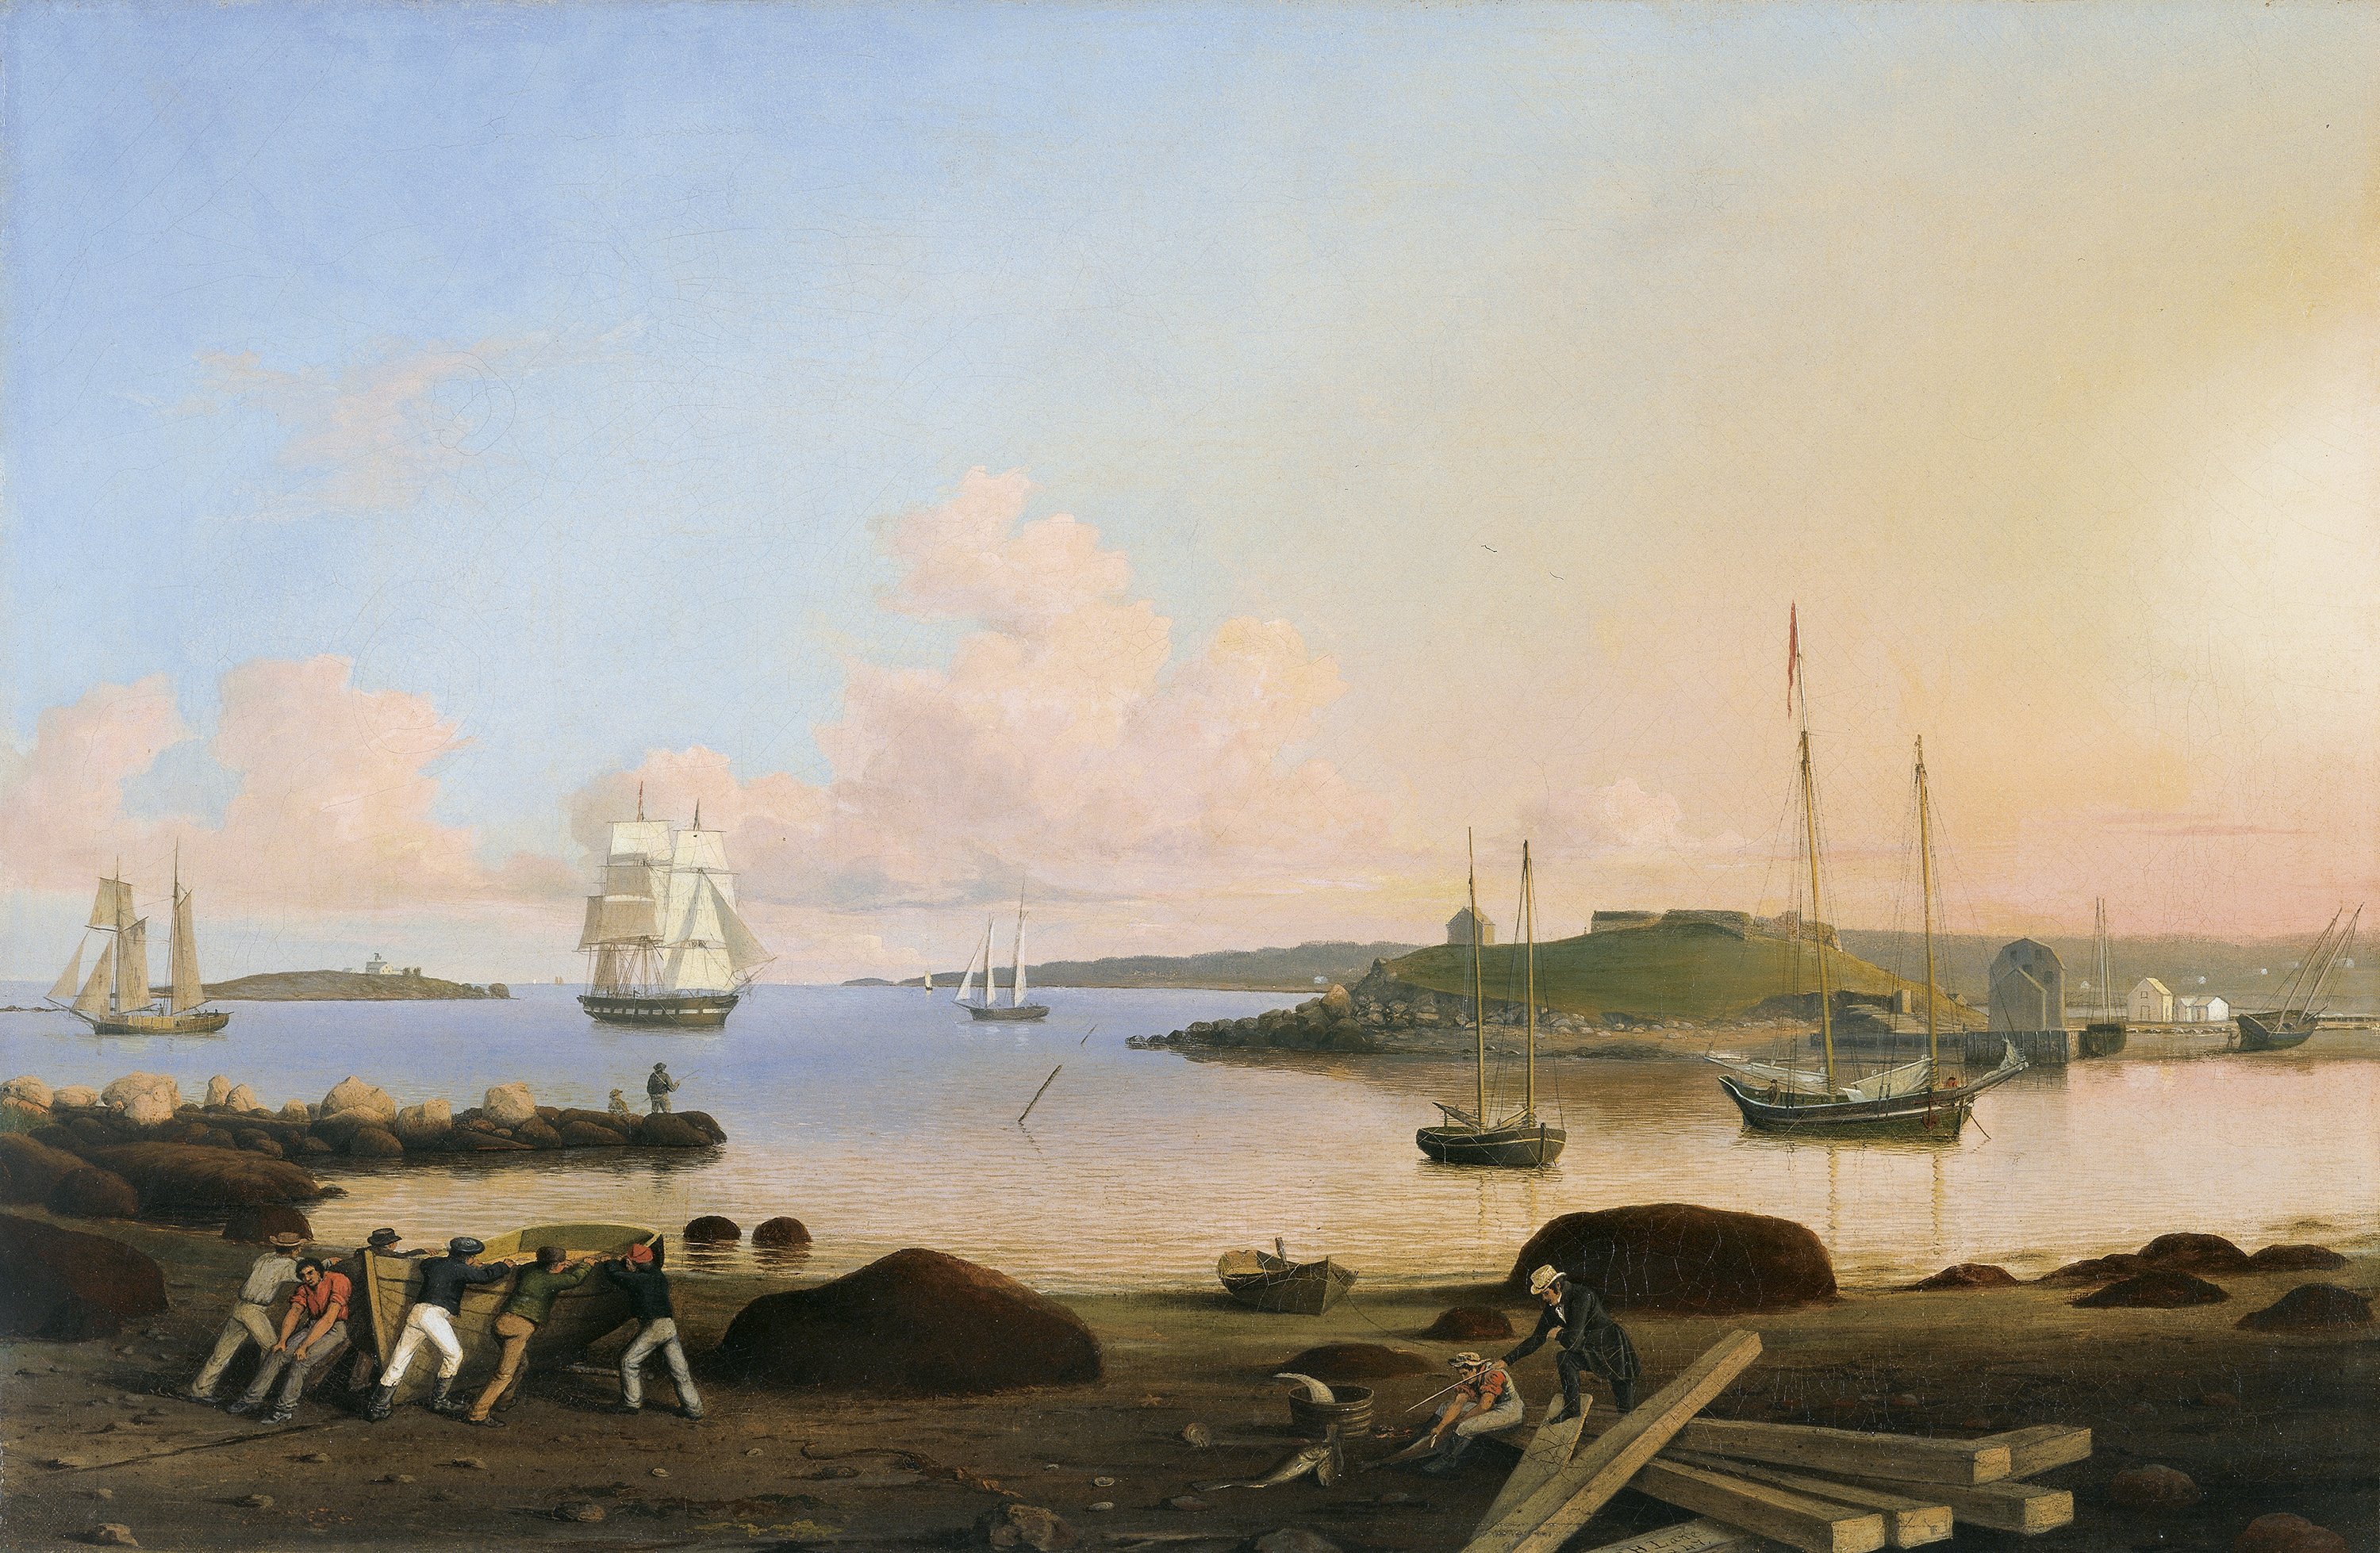 The Fort and Ten Pound Island, Gloucester, Massachusetts. El fuerte y la isla Ten Pound, Gloucester, Massachusetts, 1847